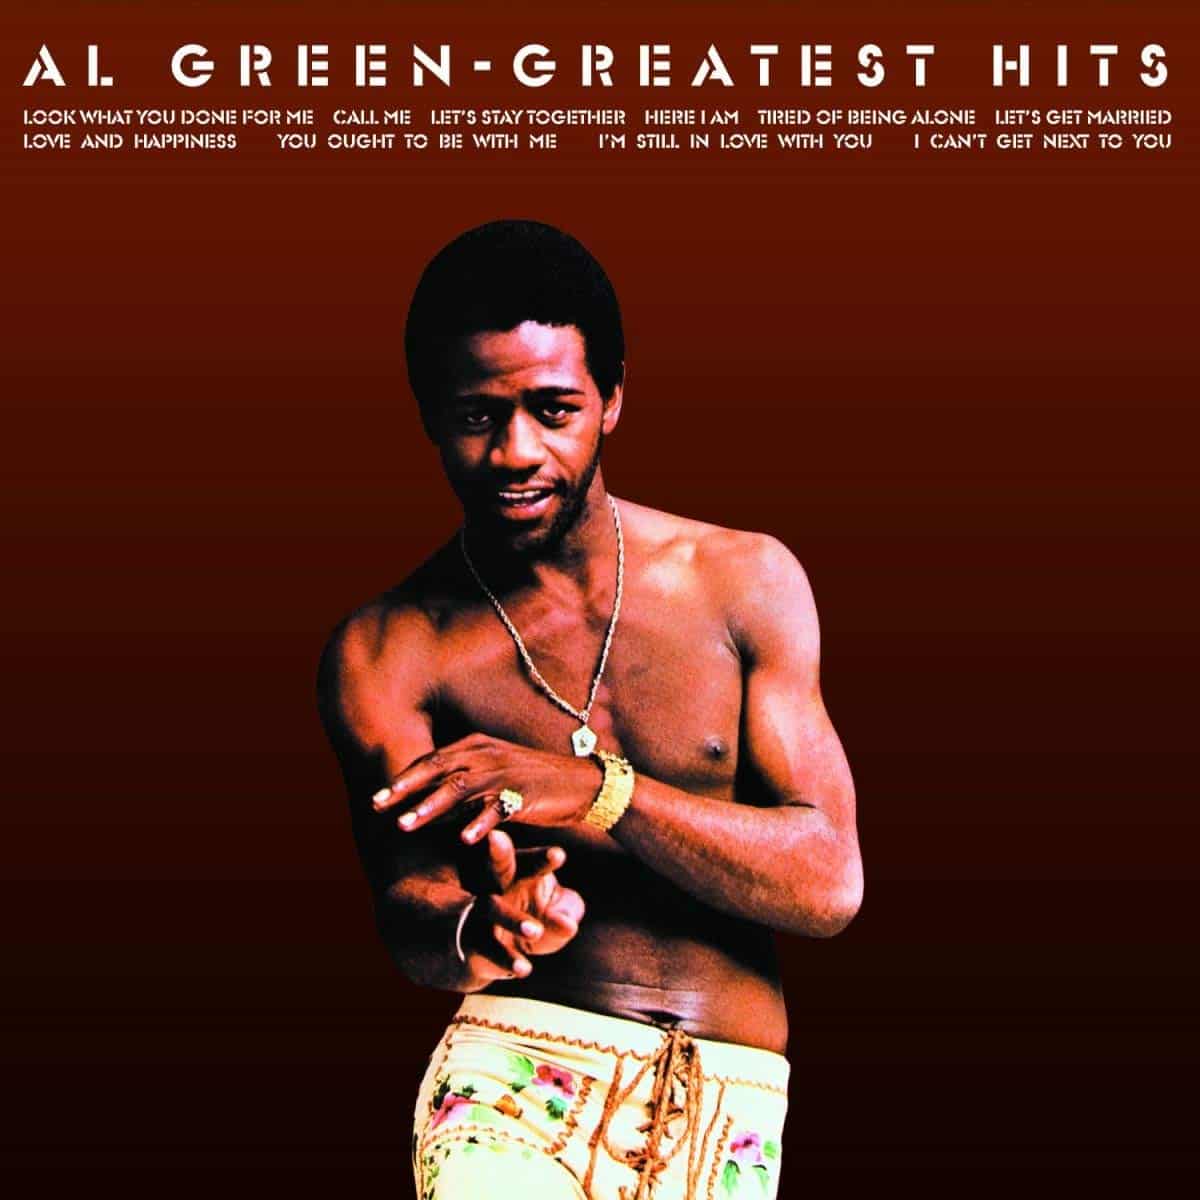 Al-Green-Greatest-Hits-vinyl-record-album-front